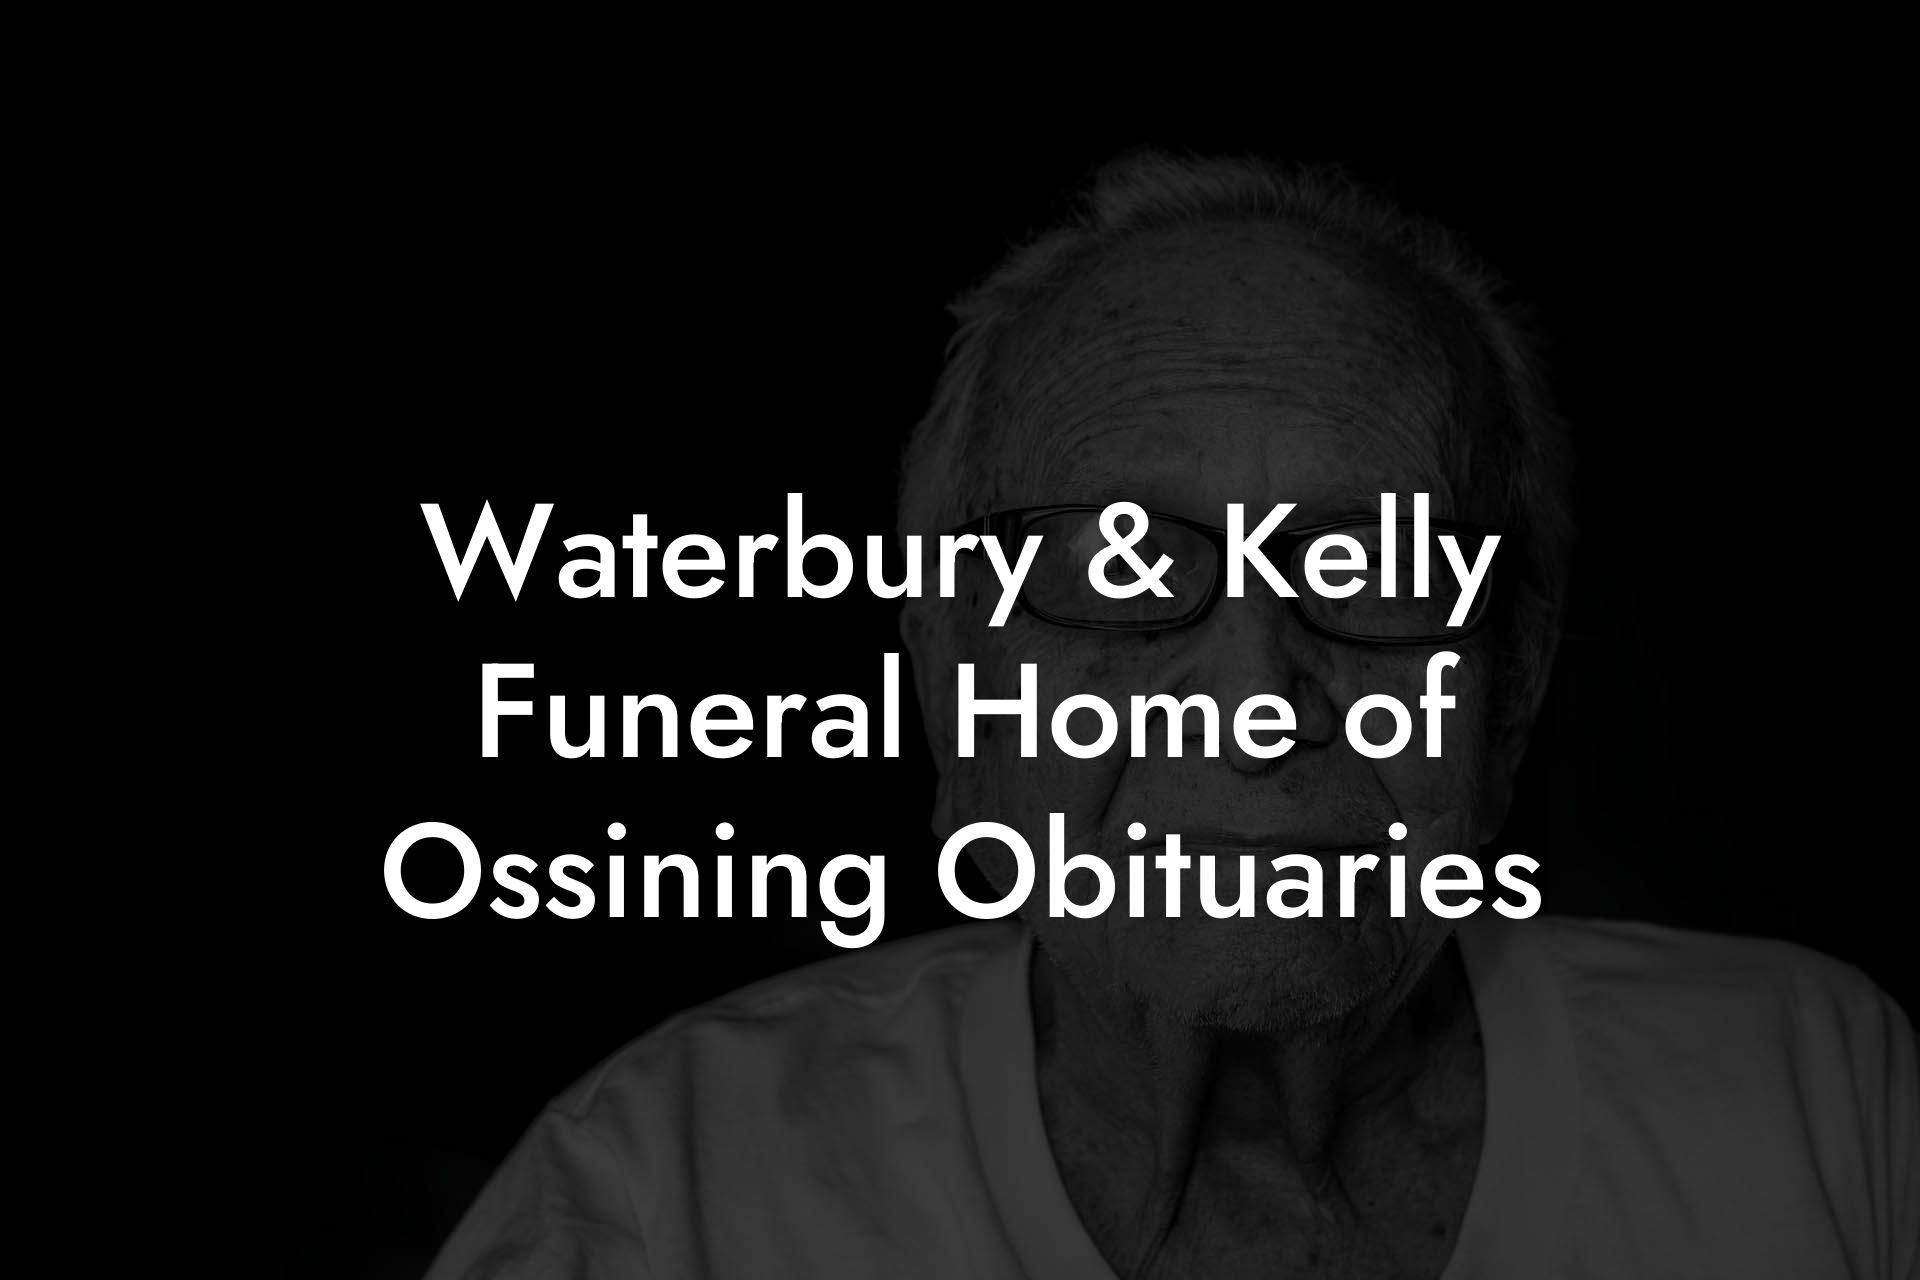 Waterbury & Kelly Funeral Home of Ossining Obituaries